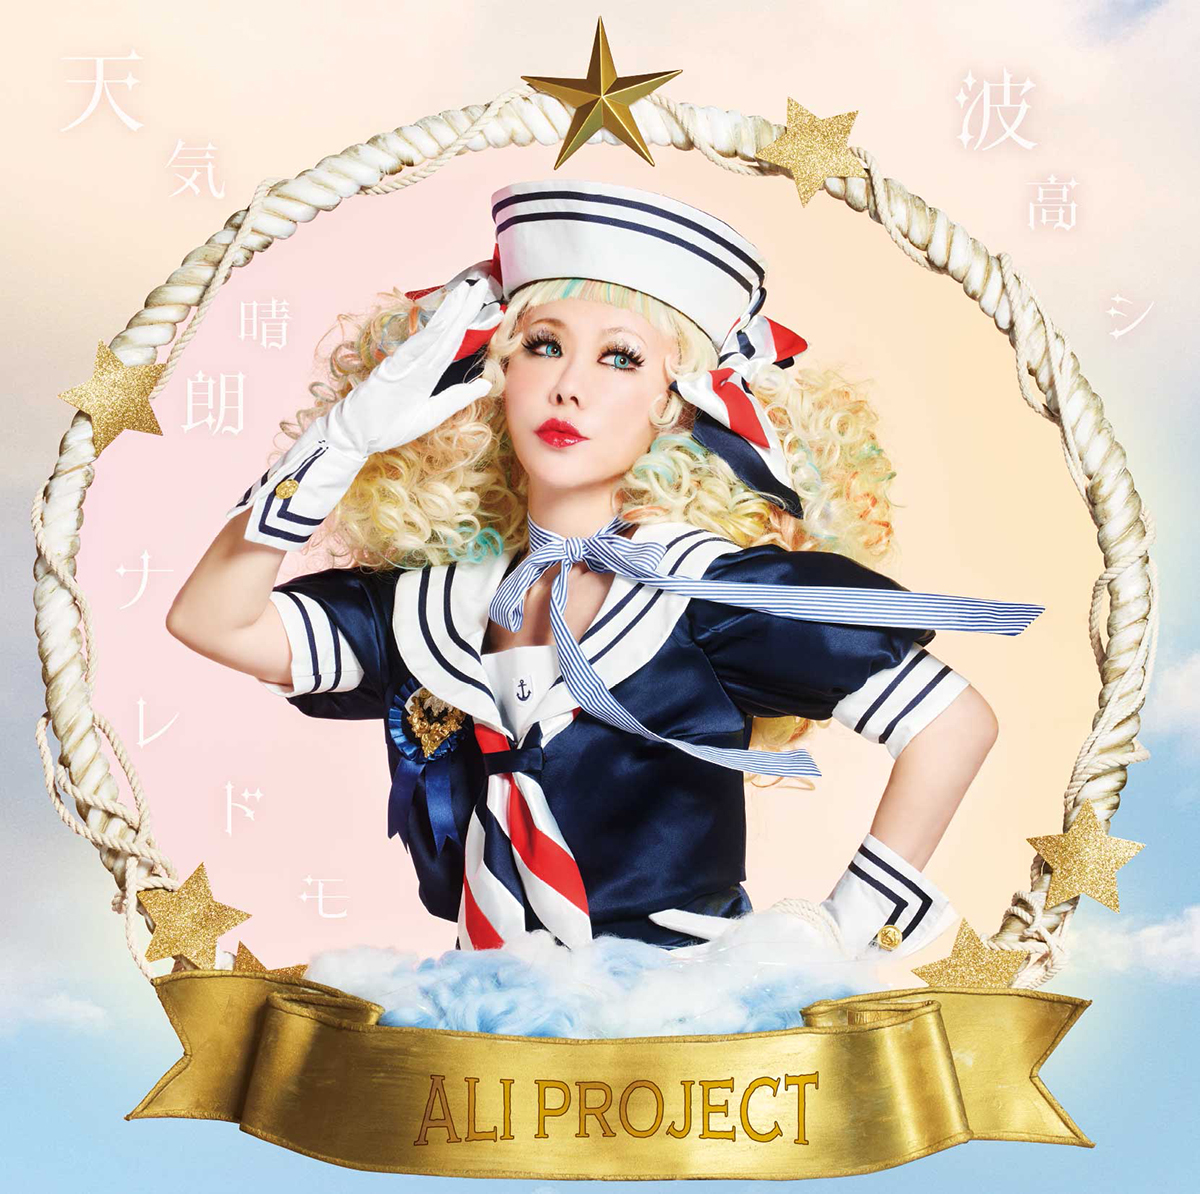 ALI PROJECT 14ヶ月ぶりとなるニューアルバム2月22日発売＆ビジュアル公開！ - 画像一覧（1/3）